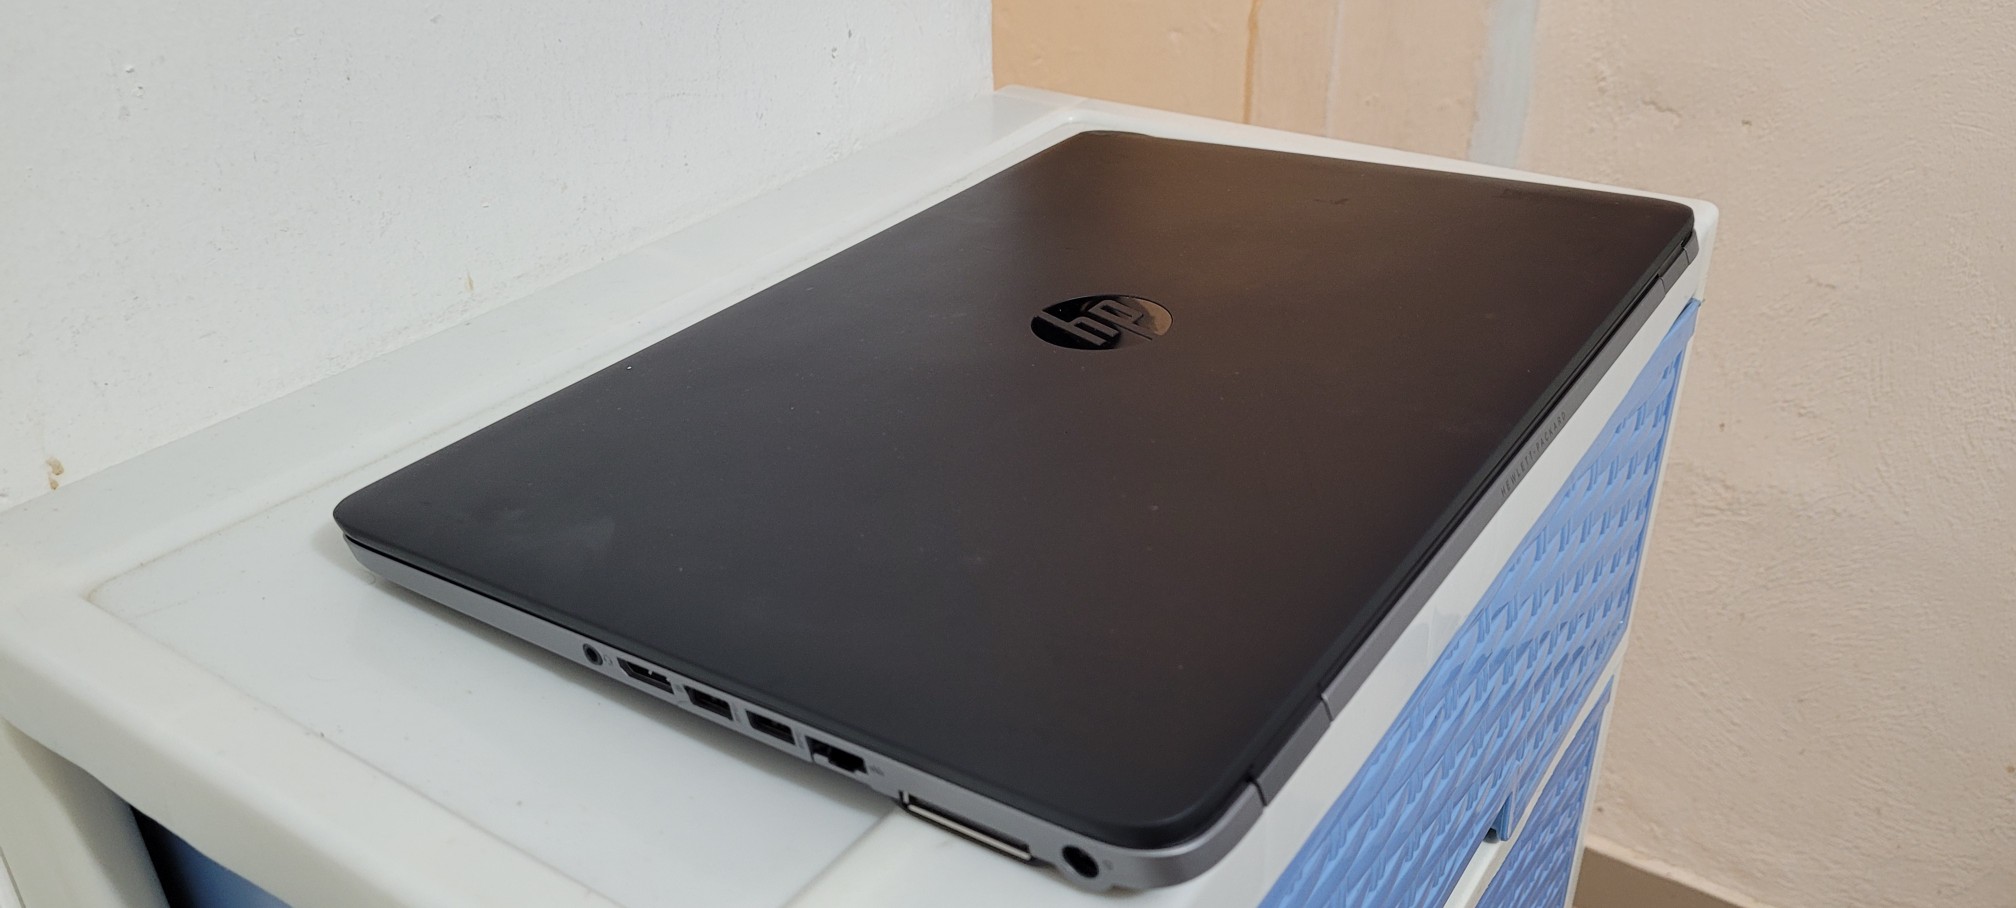 computadoras y laptops - Hp Elitebook 17 Pulg Core i5 Ram 8gb Disco 256gb SSD Full HD 2